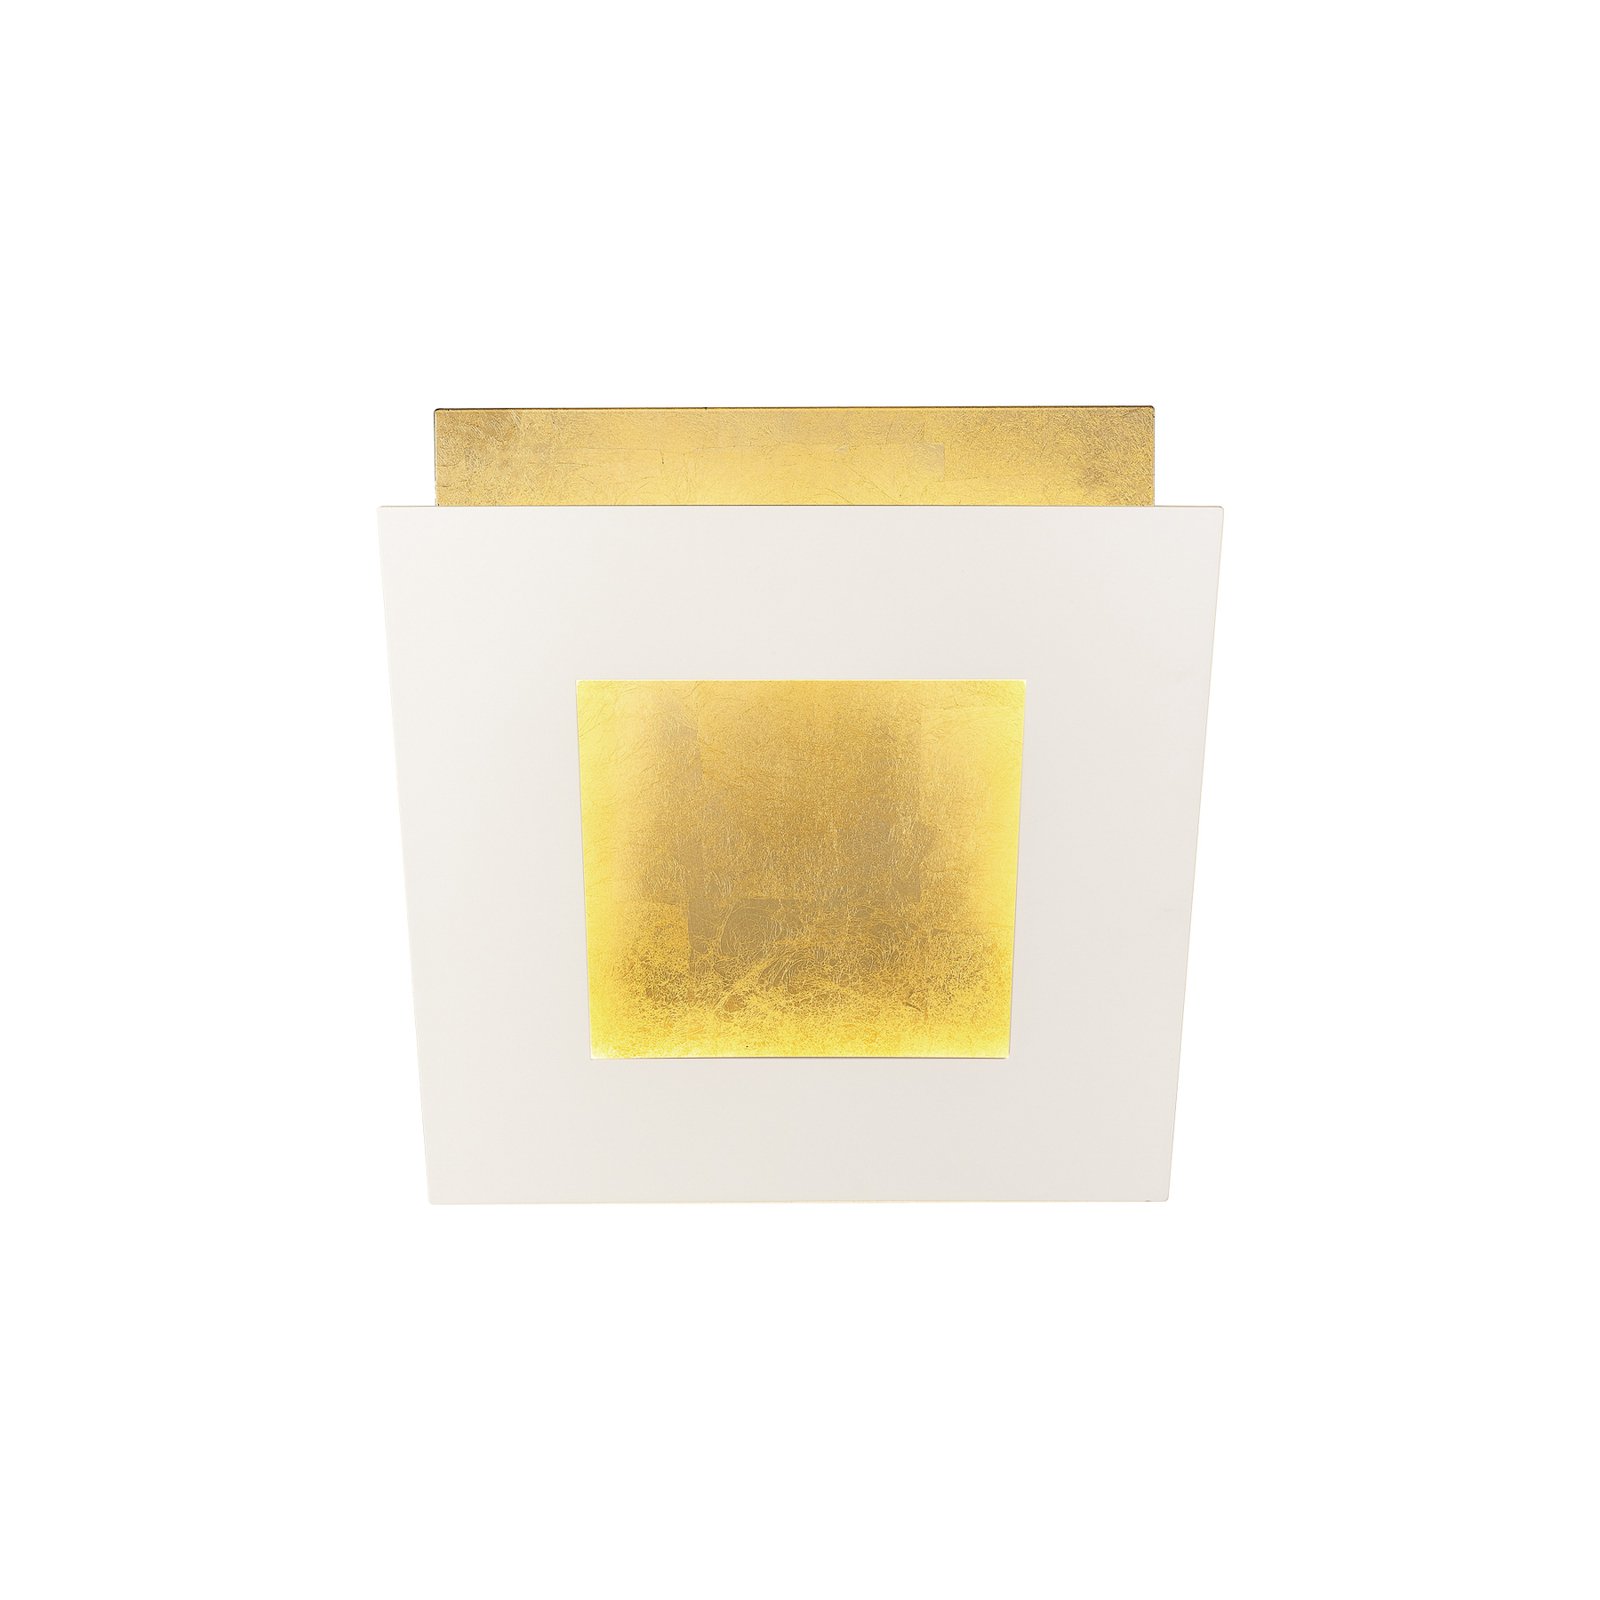 LED sienas lampa Dalia, balta/zelta, 18 x 18 cm, alumīnija